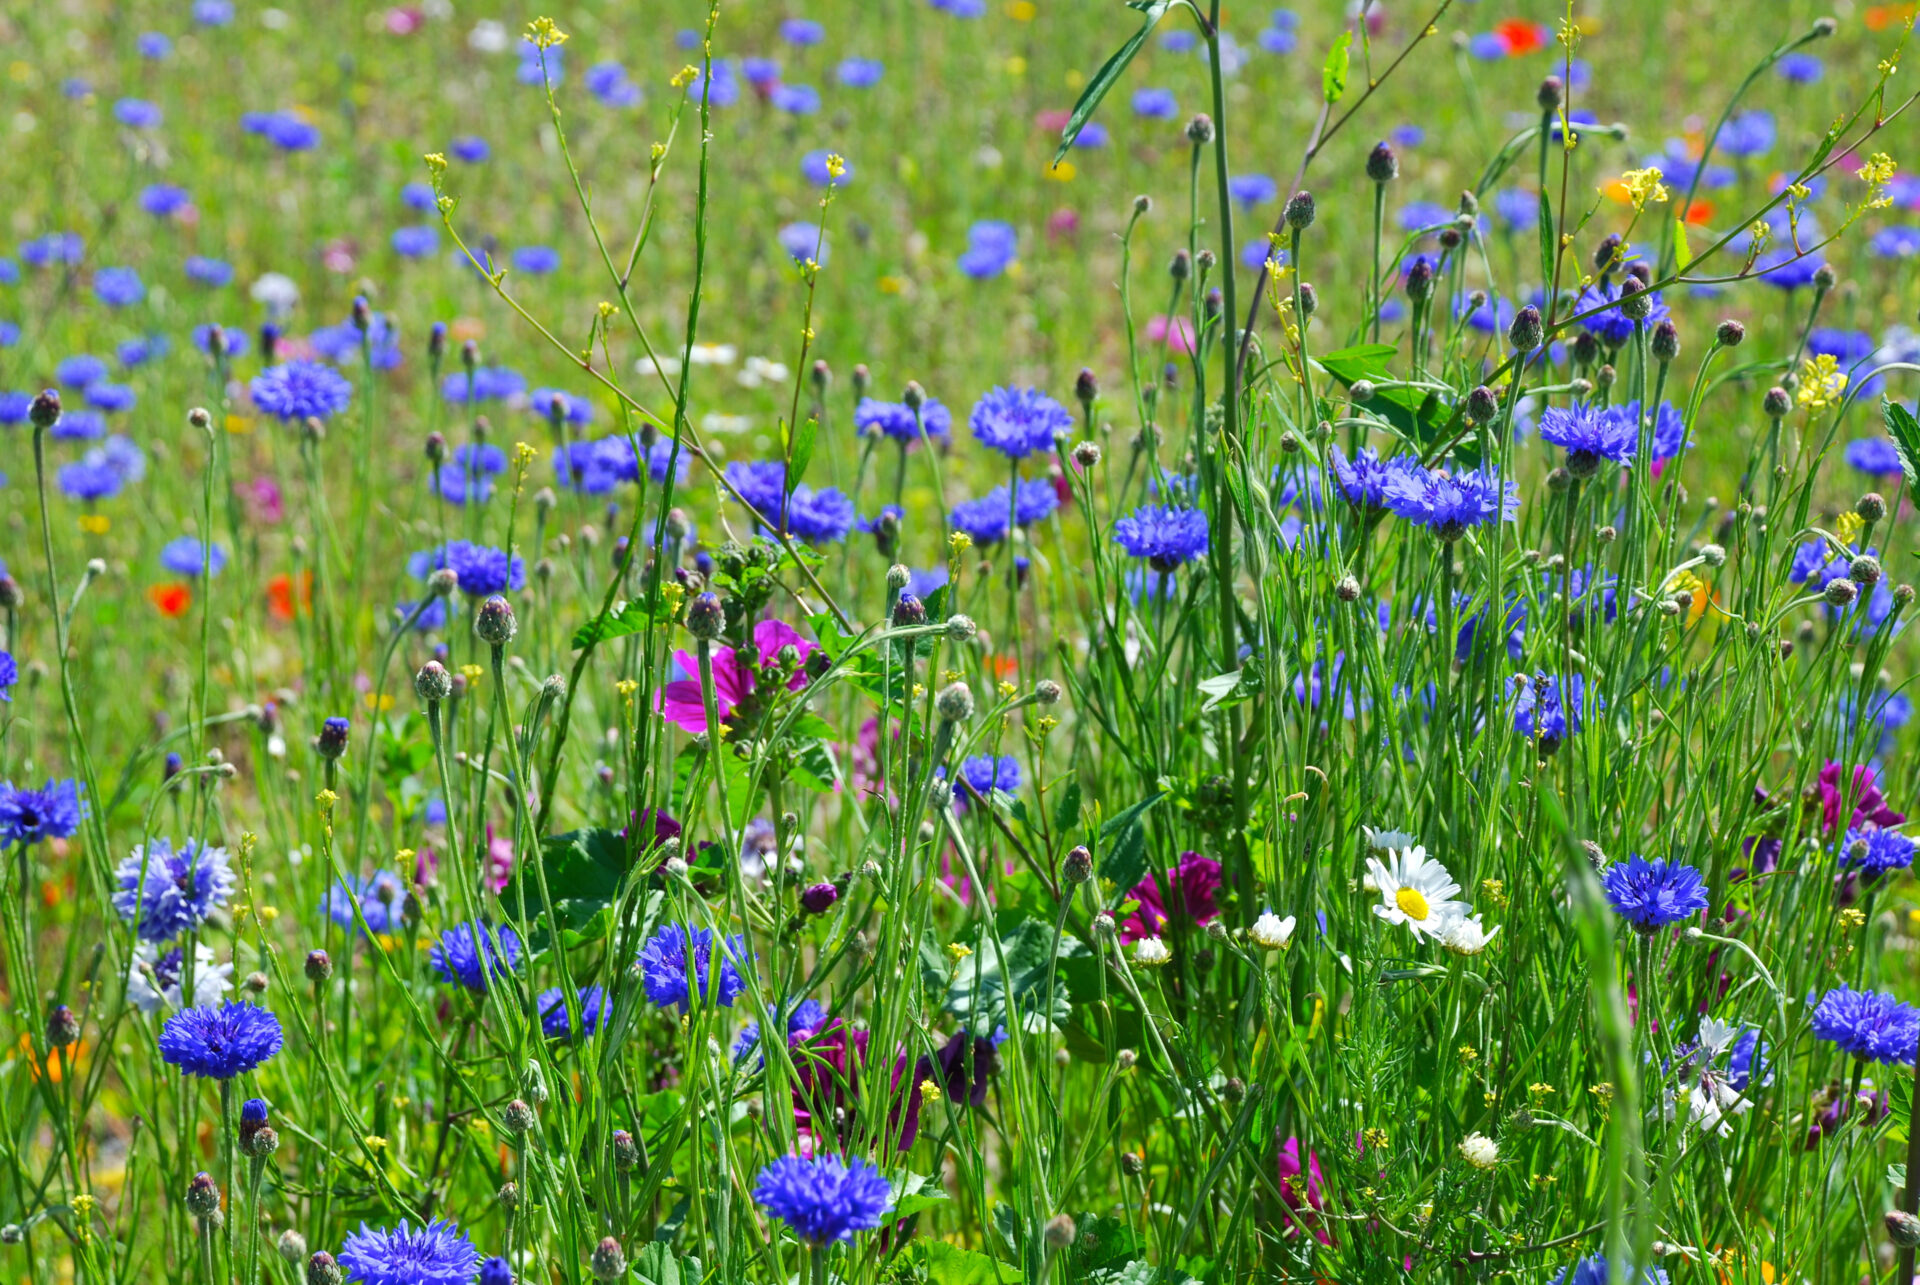 Wildflowers in summer meadow